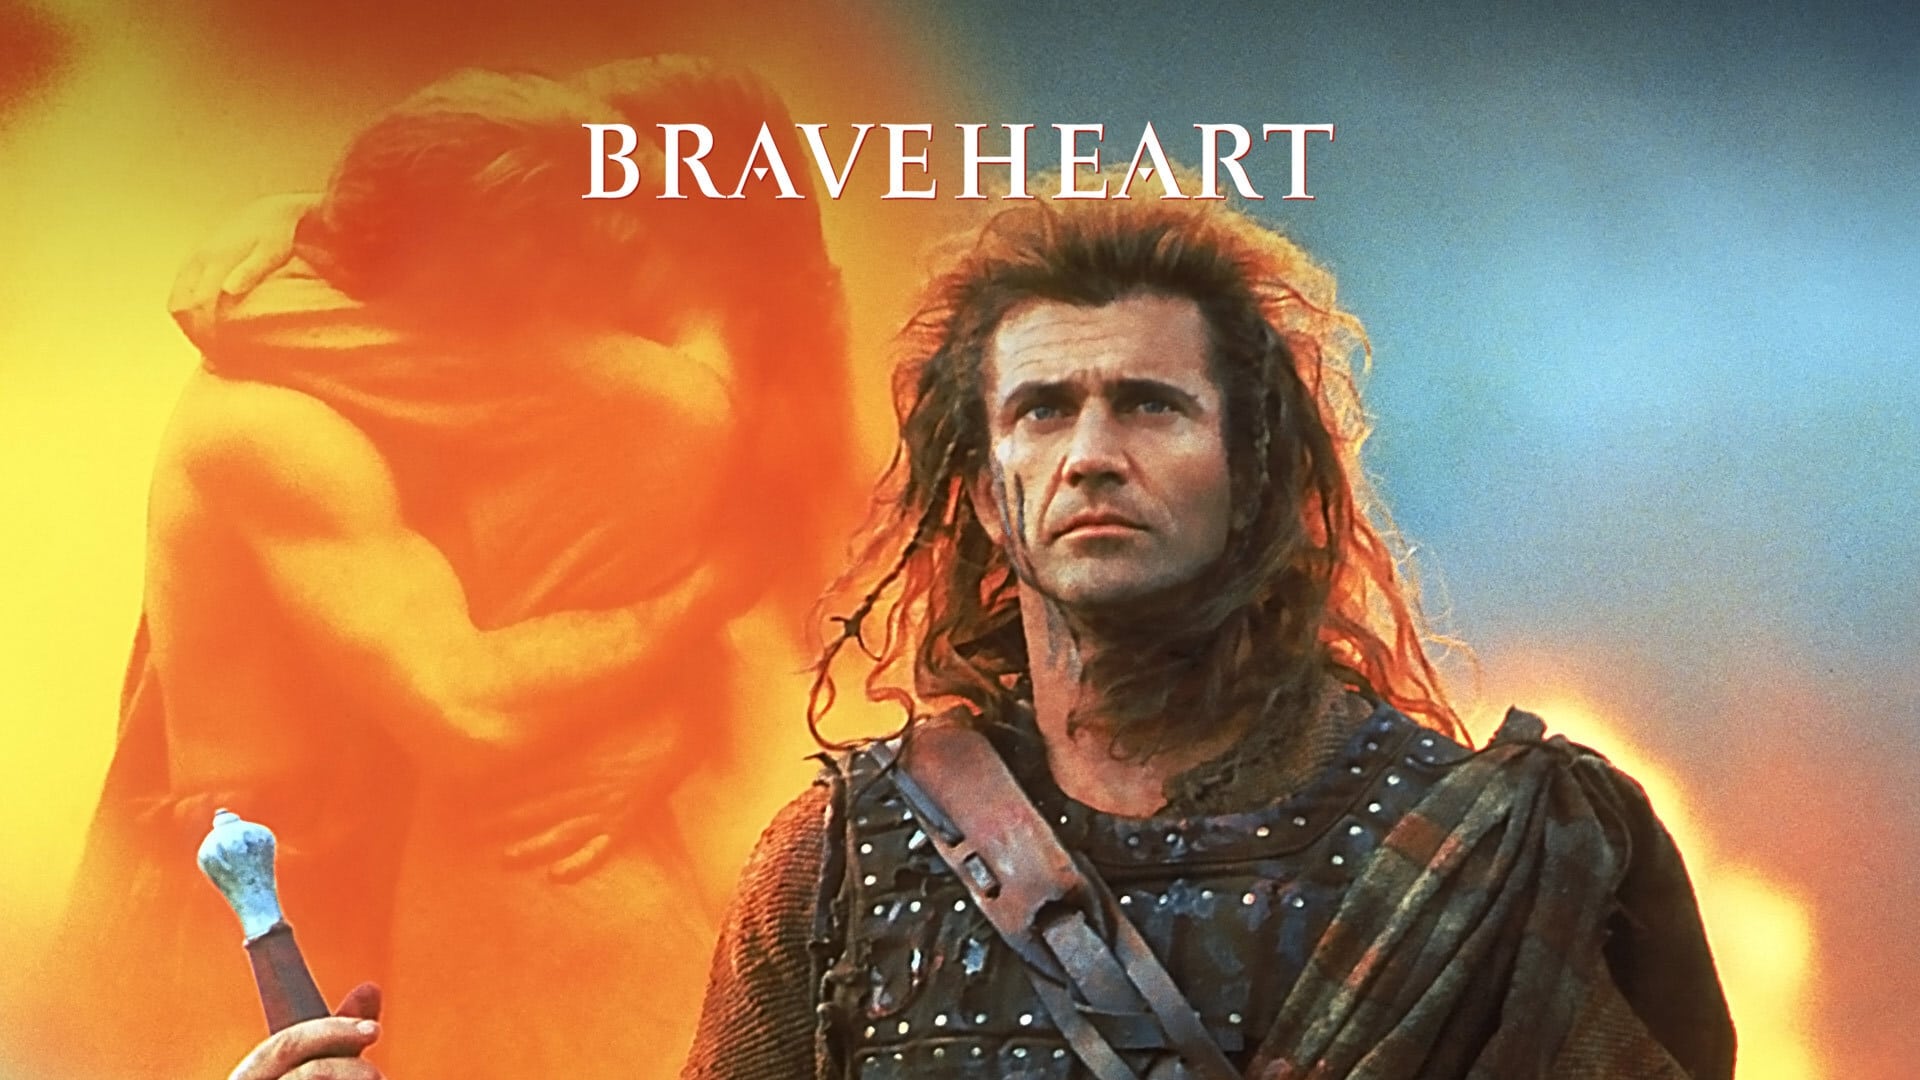 Braveheart - Cuore impavido